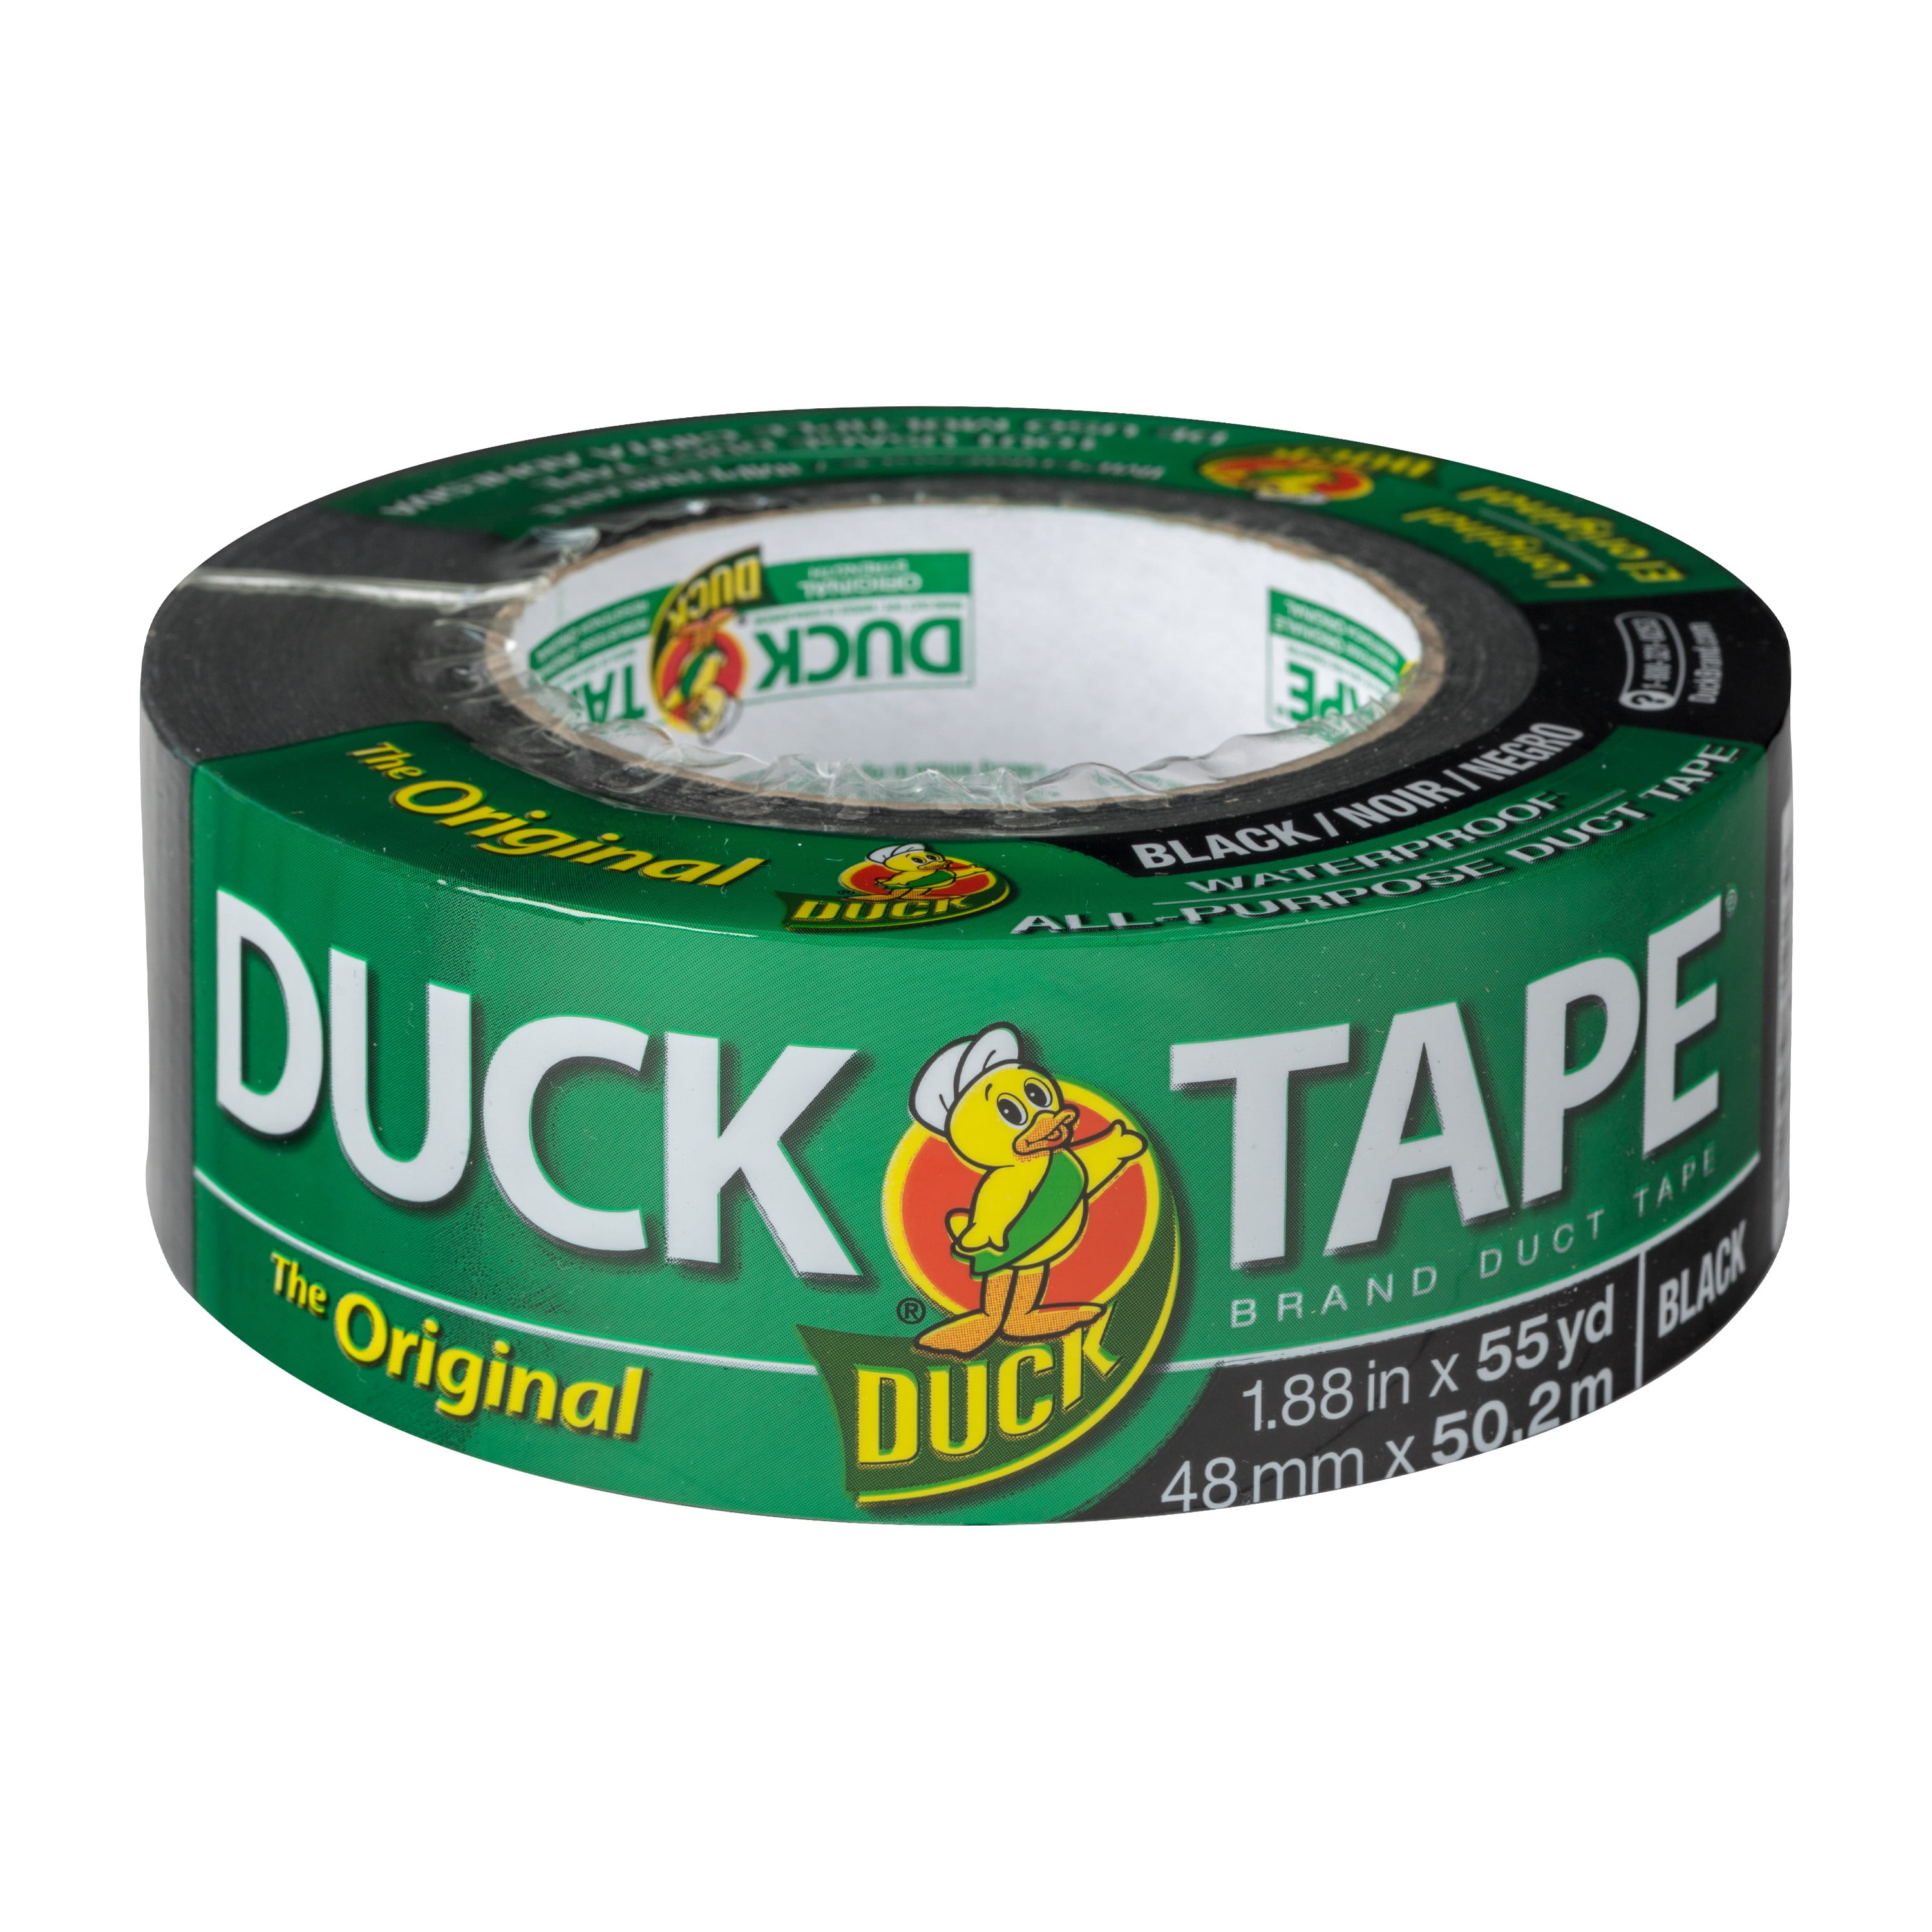 Duck Tape® Brand Duct Tape - Black, 1 ct - Harris Teeter